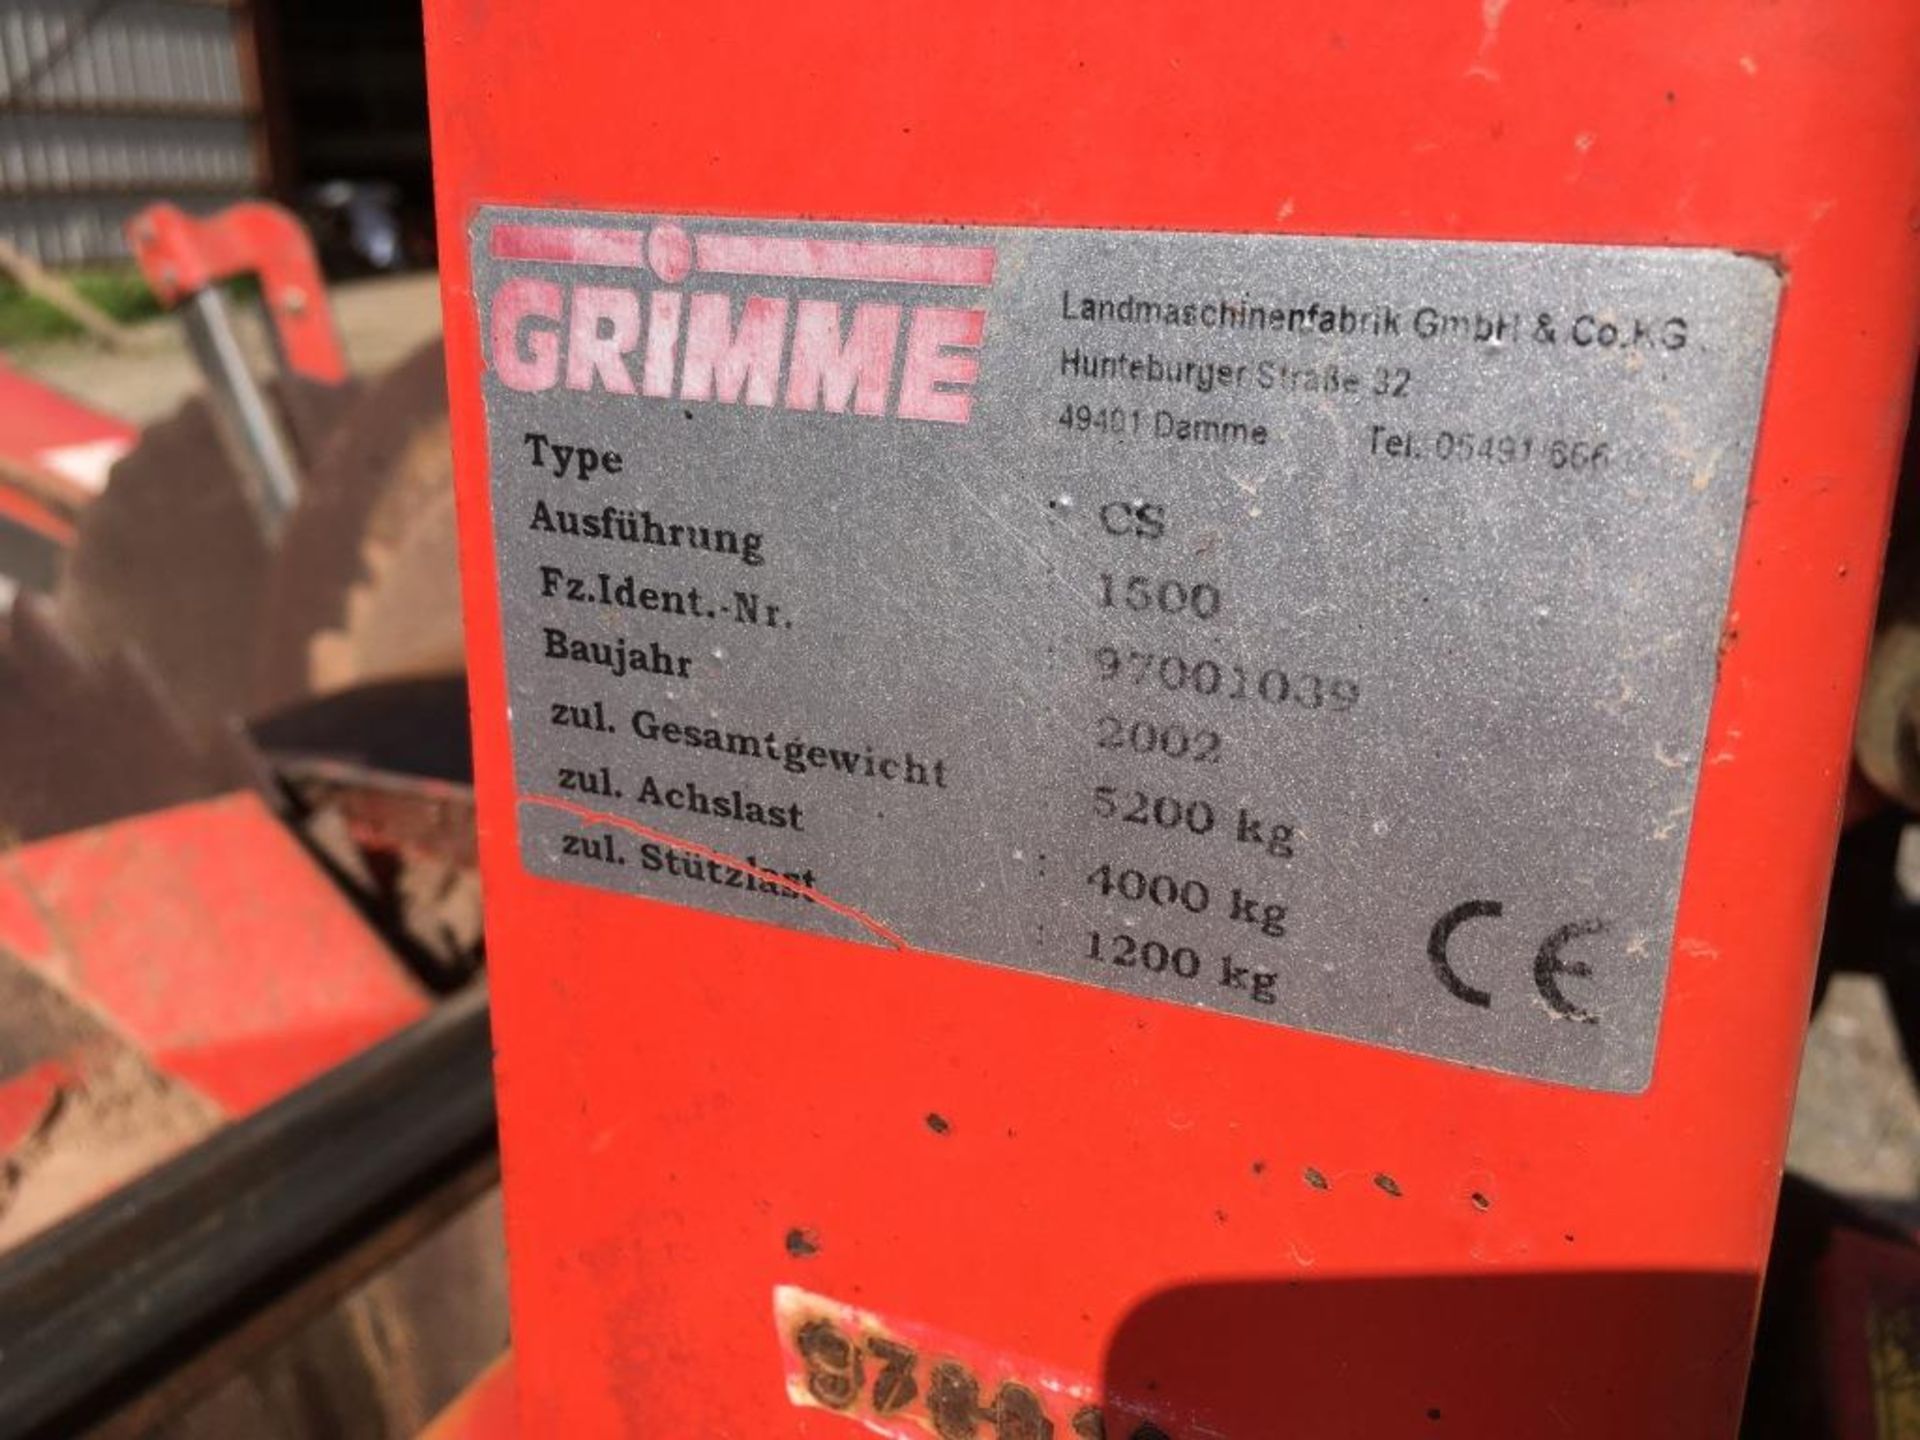 Grimme Combi Star CS 1500 destoner, serial number: 97001039 (2002) - Image 11 of 12